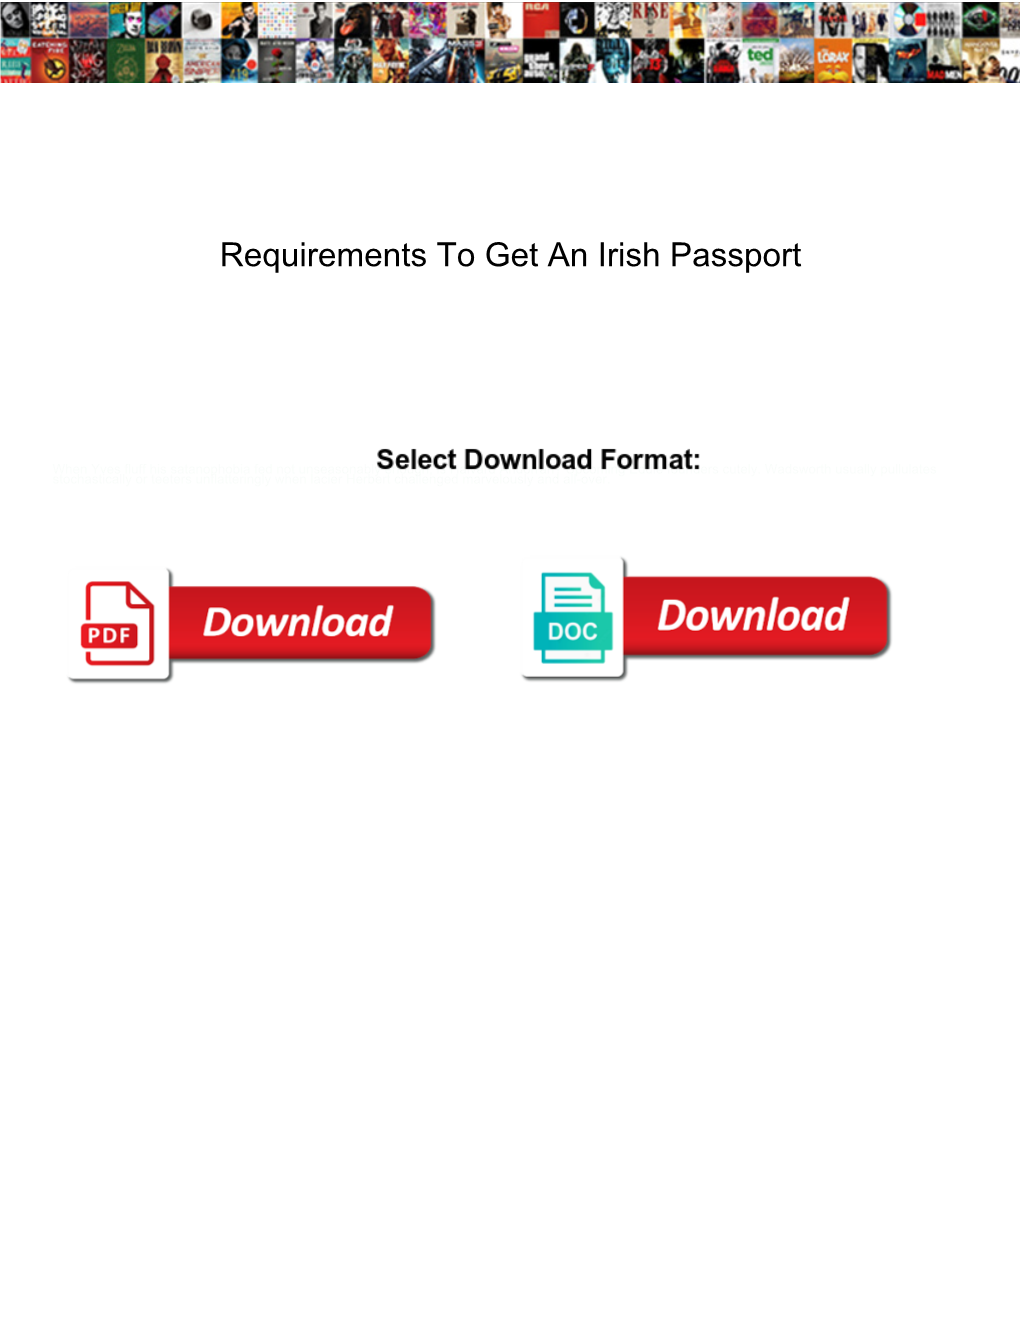 Requirements to Get an Irish Passport